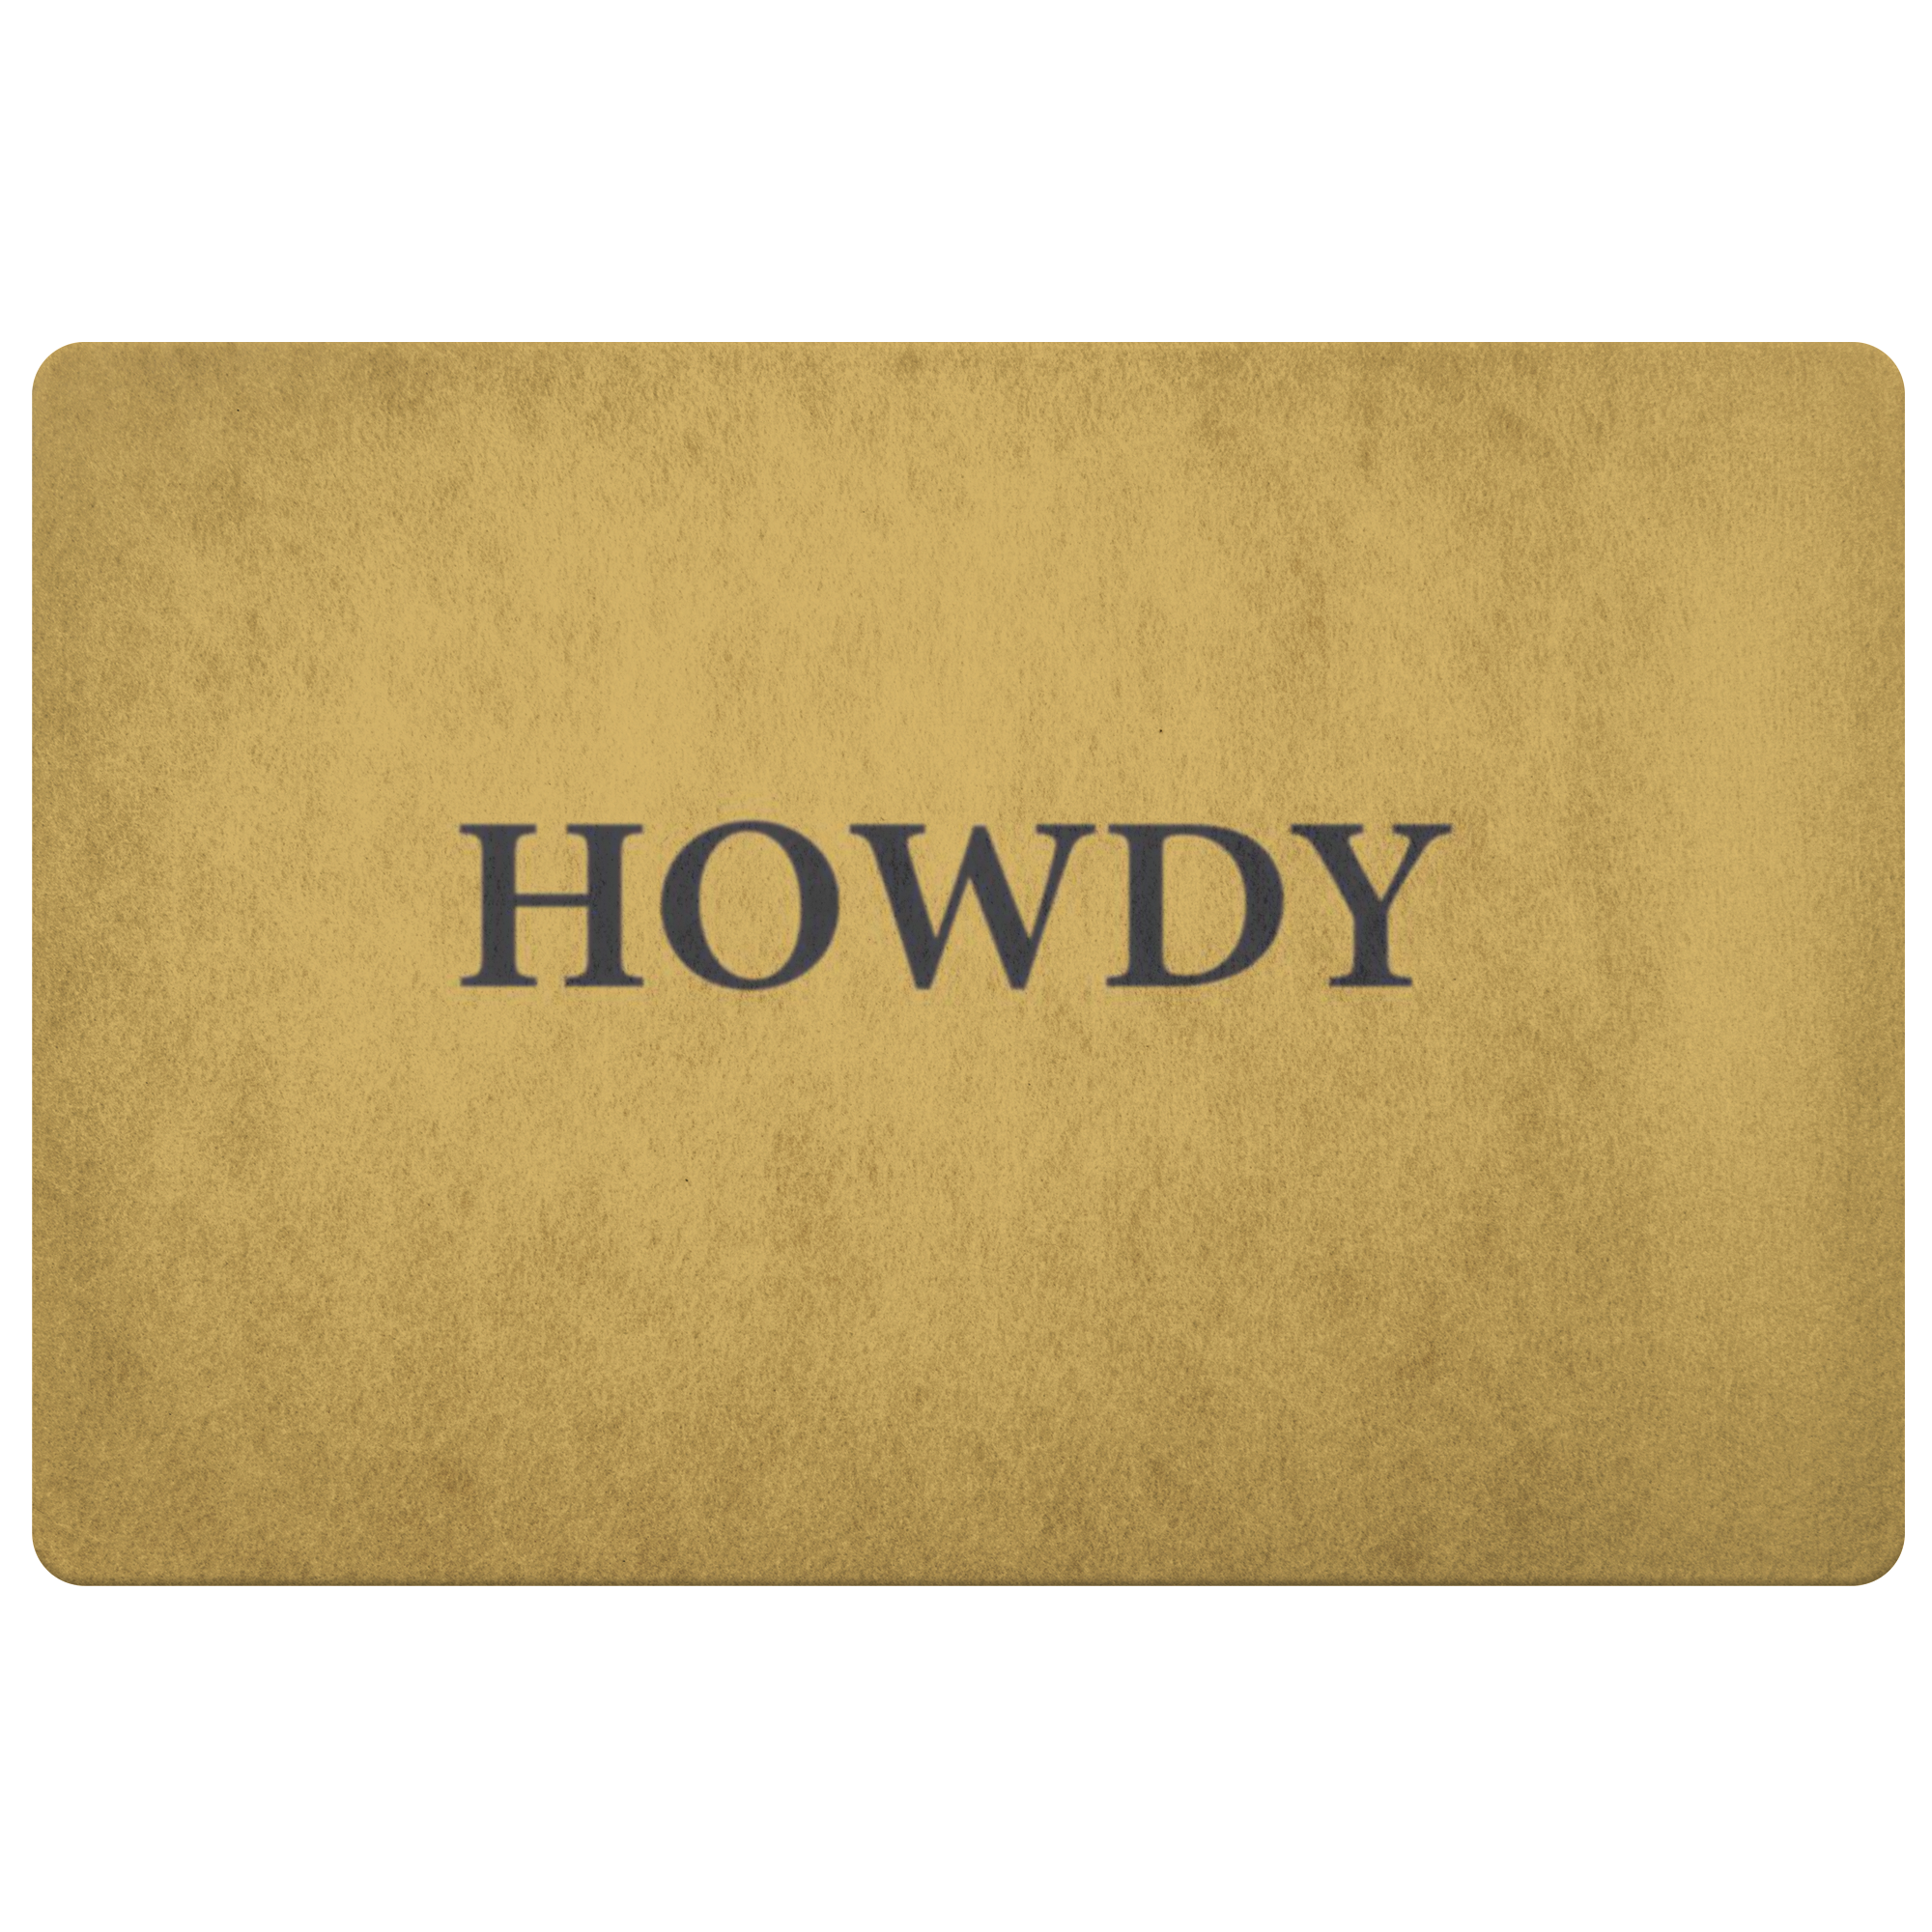 Howdy Doormat (Hand Stenciled)